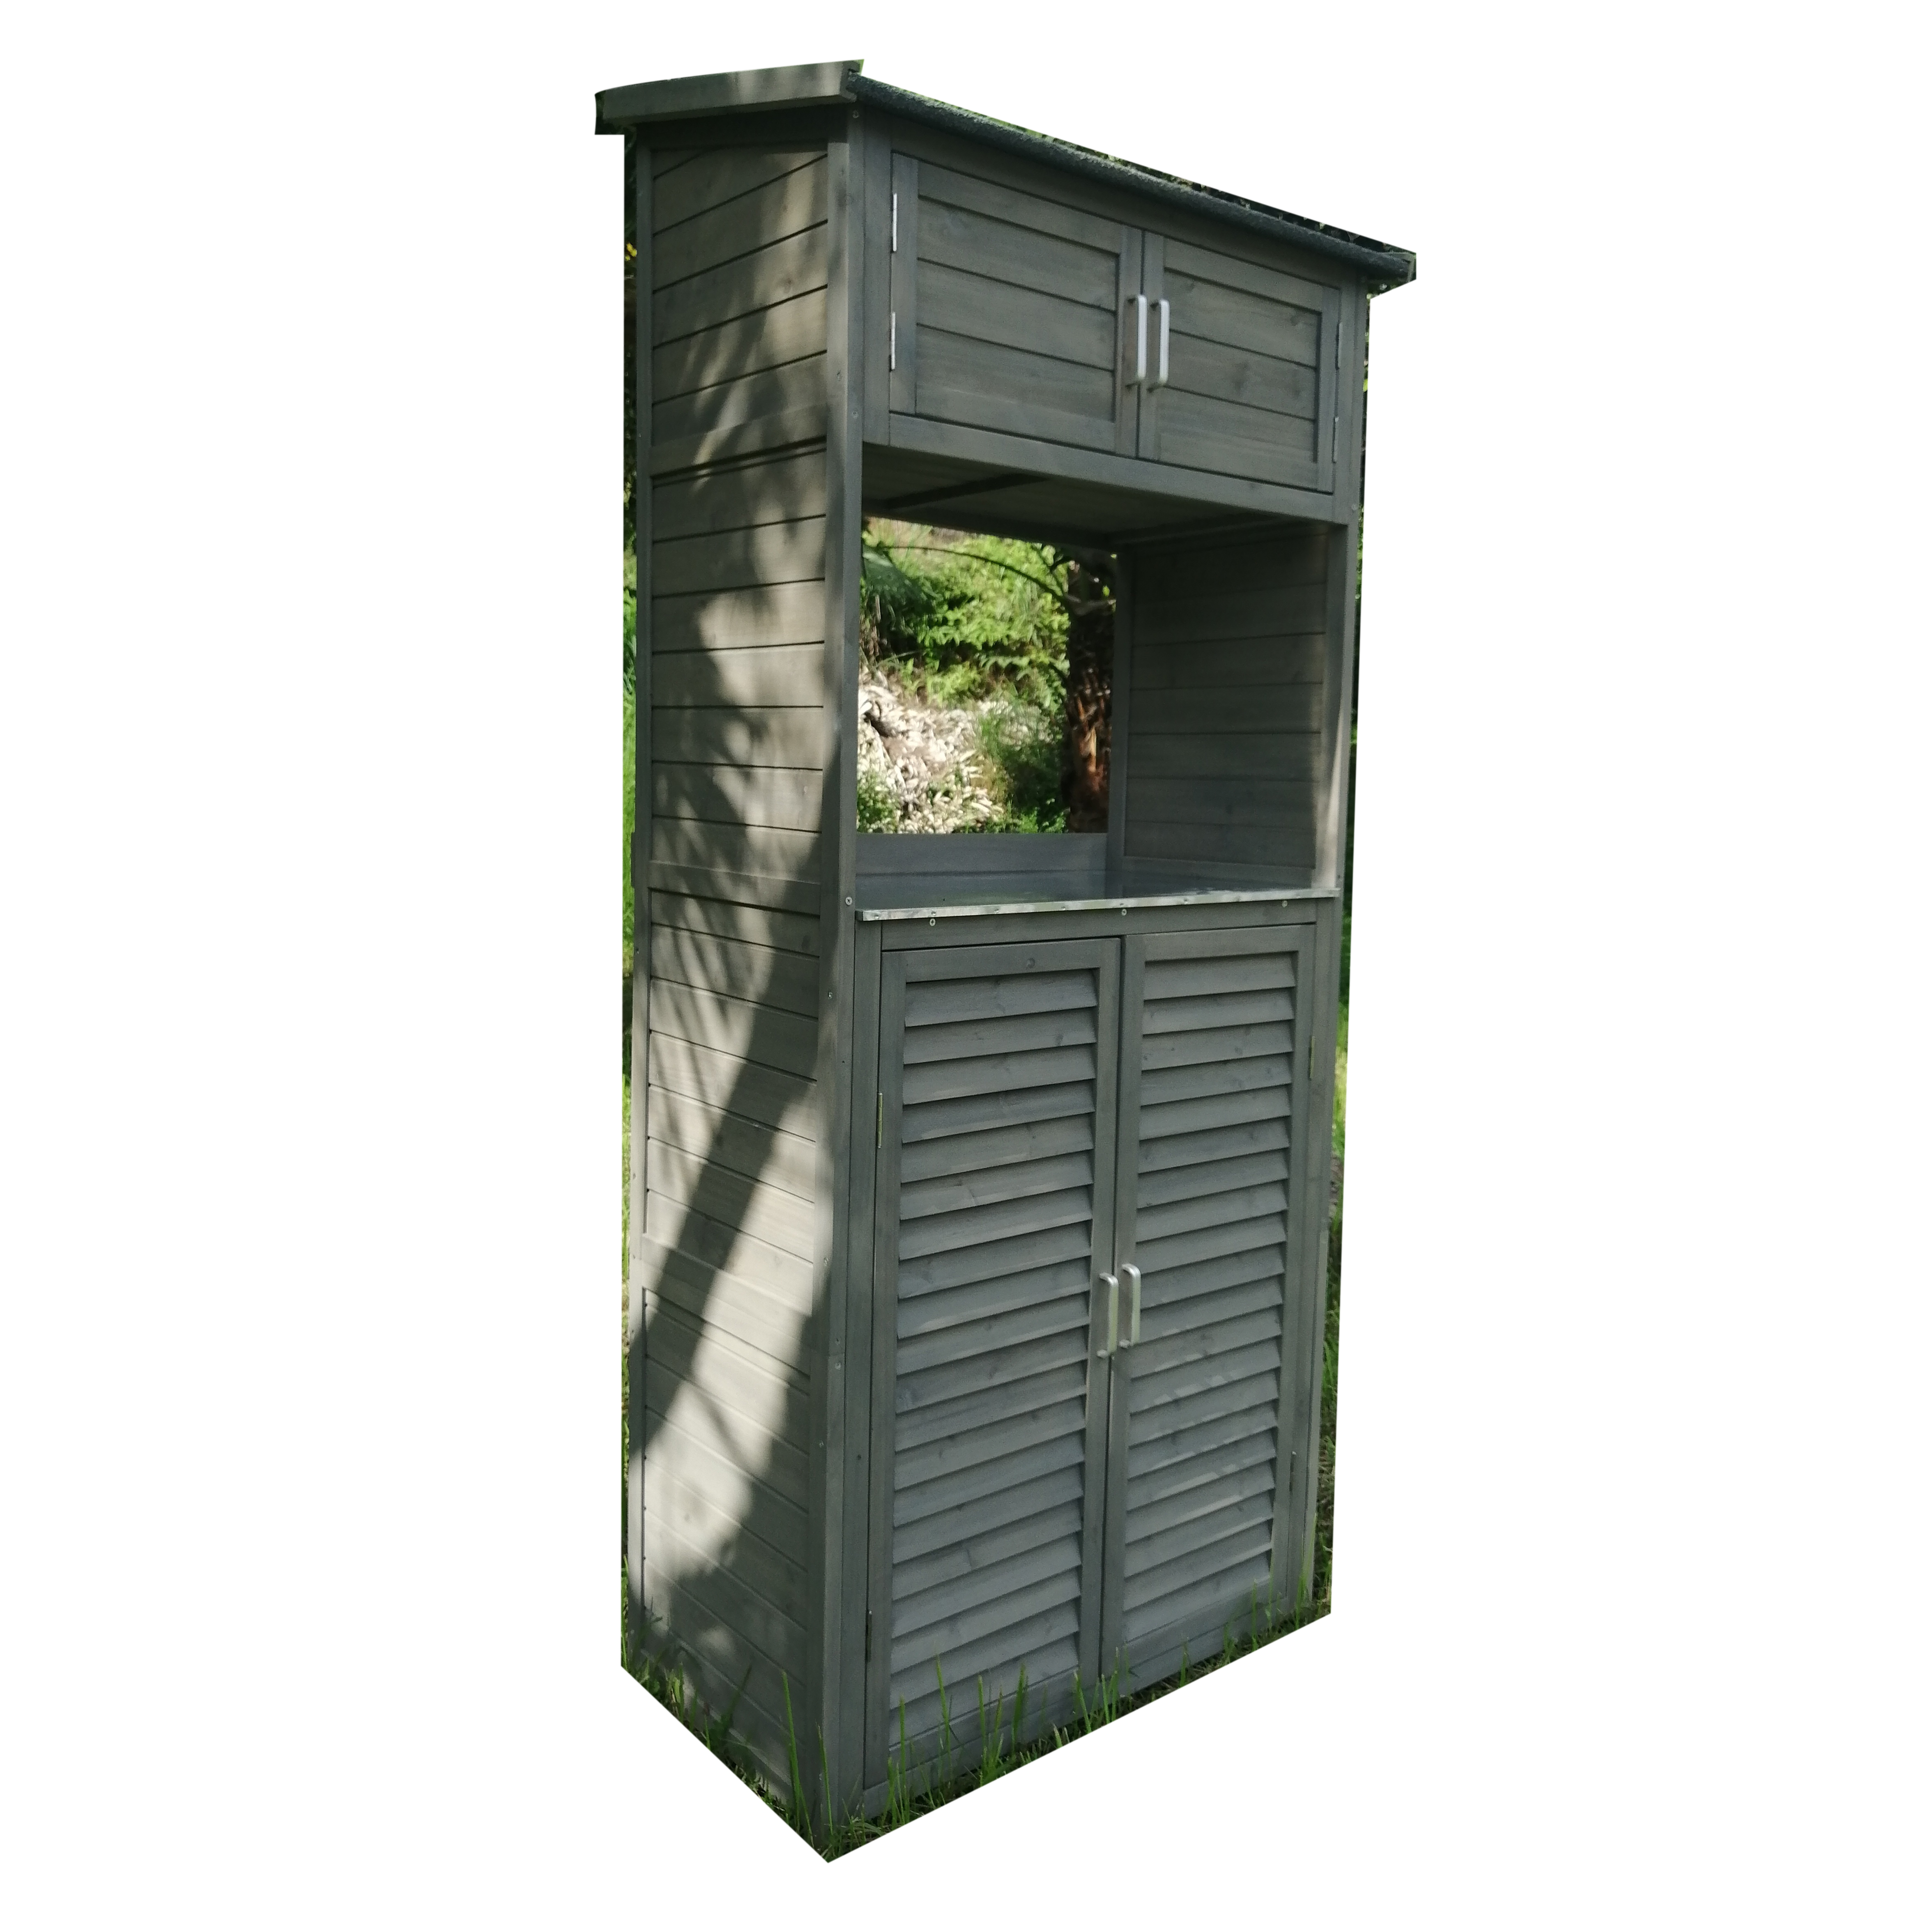 Easily-assenbled Garden shutter Multi-Shelves Tool House waterproof Wooden outdoor storage sheds Cabinet